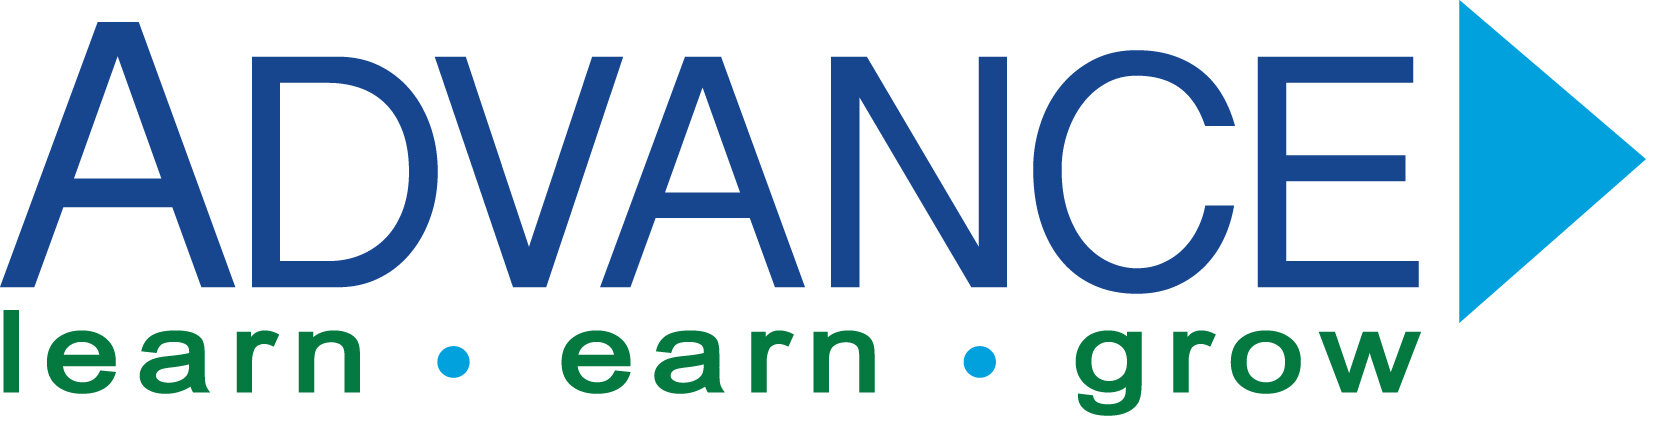 advance logo LTCC.jpg